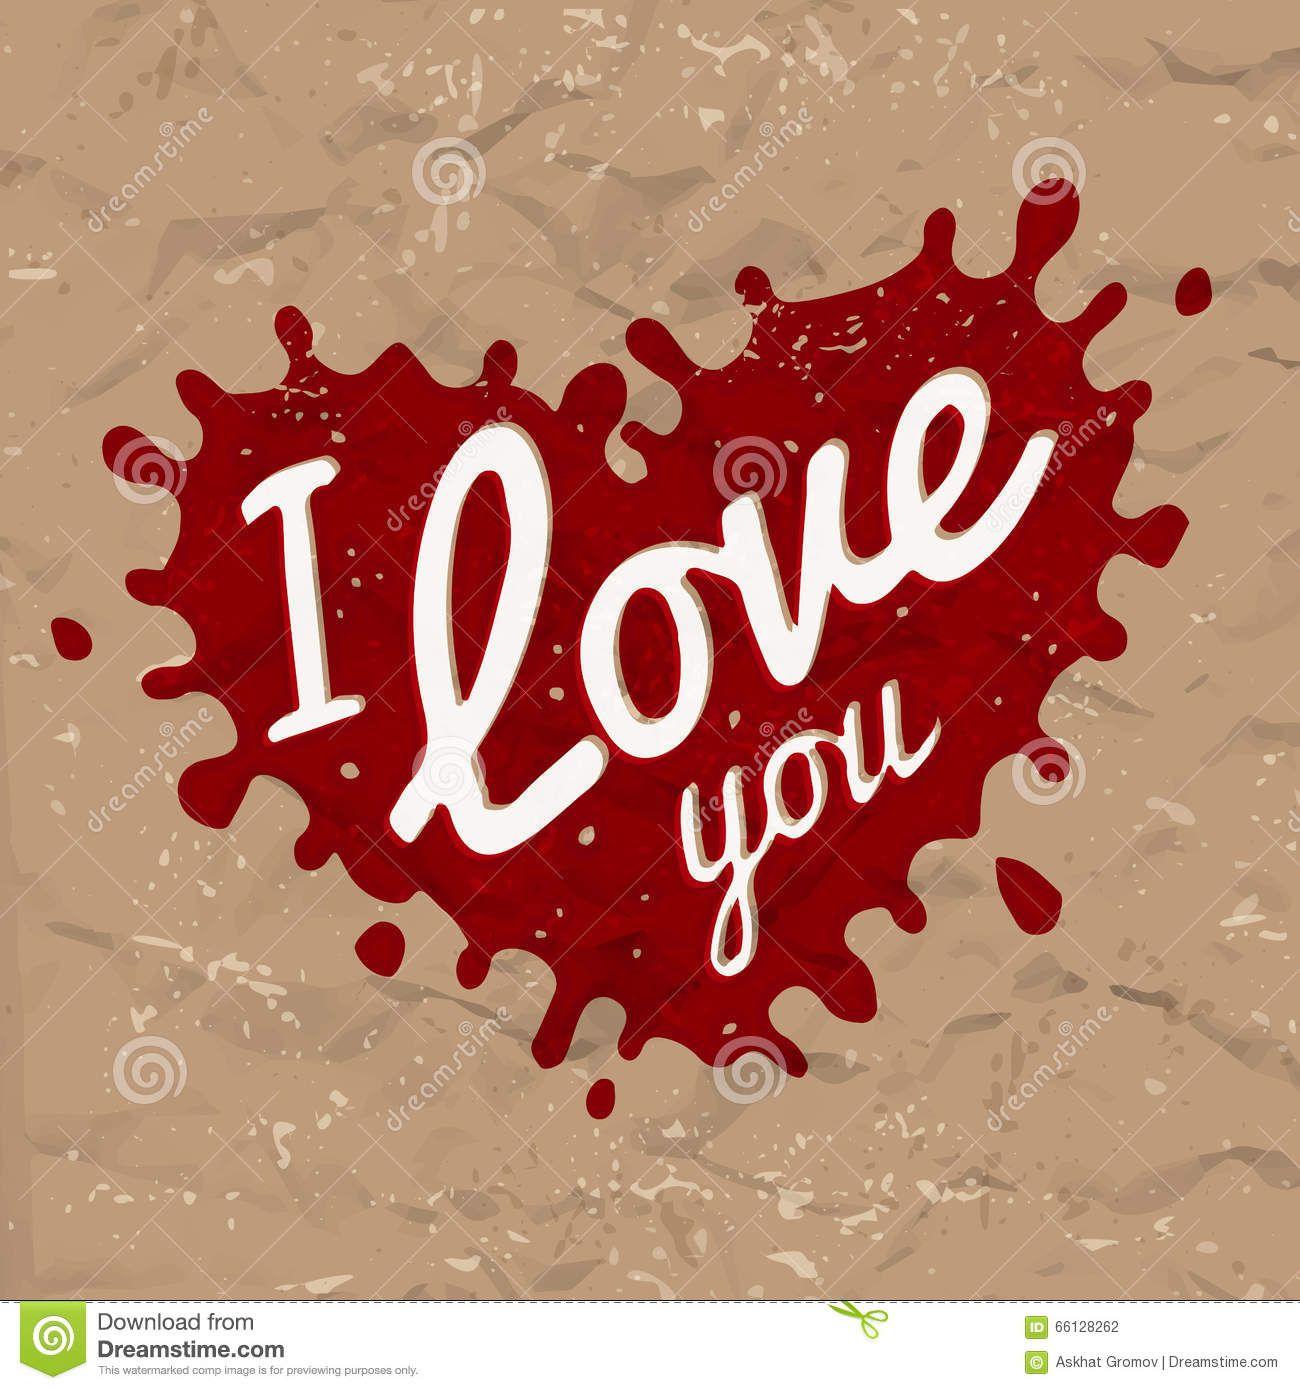 I Want U Logo - I Love You Lettering In Splash Vector Design. Retro Heart Shape ...